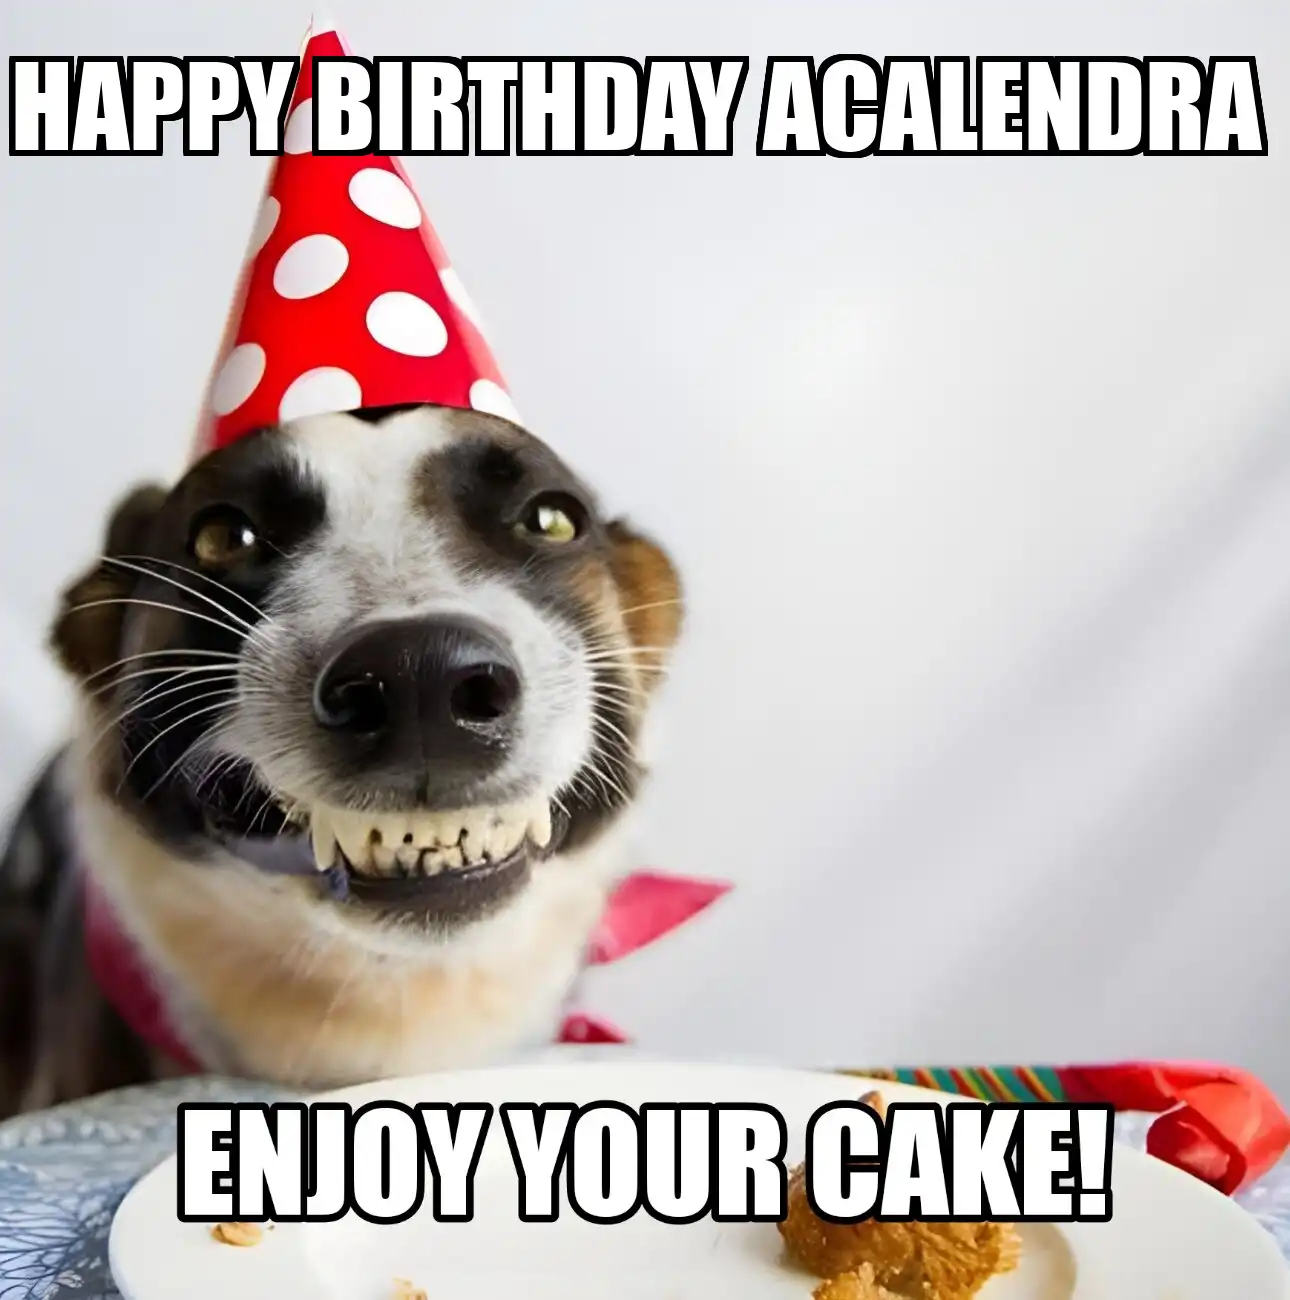 Happy Birthday Acalendra Enjoy Your Cake Dog Meme